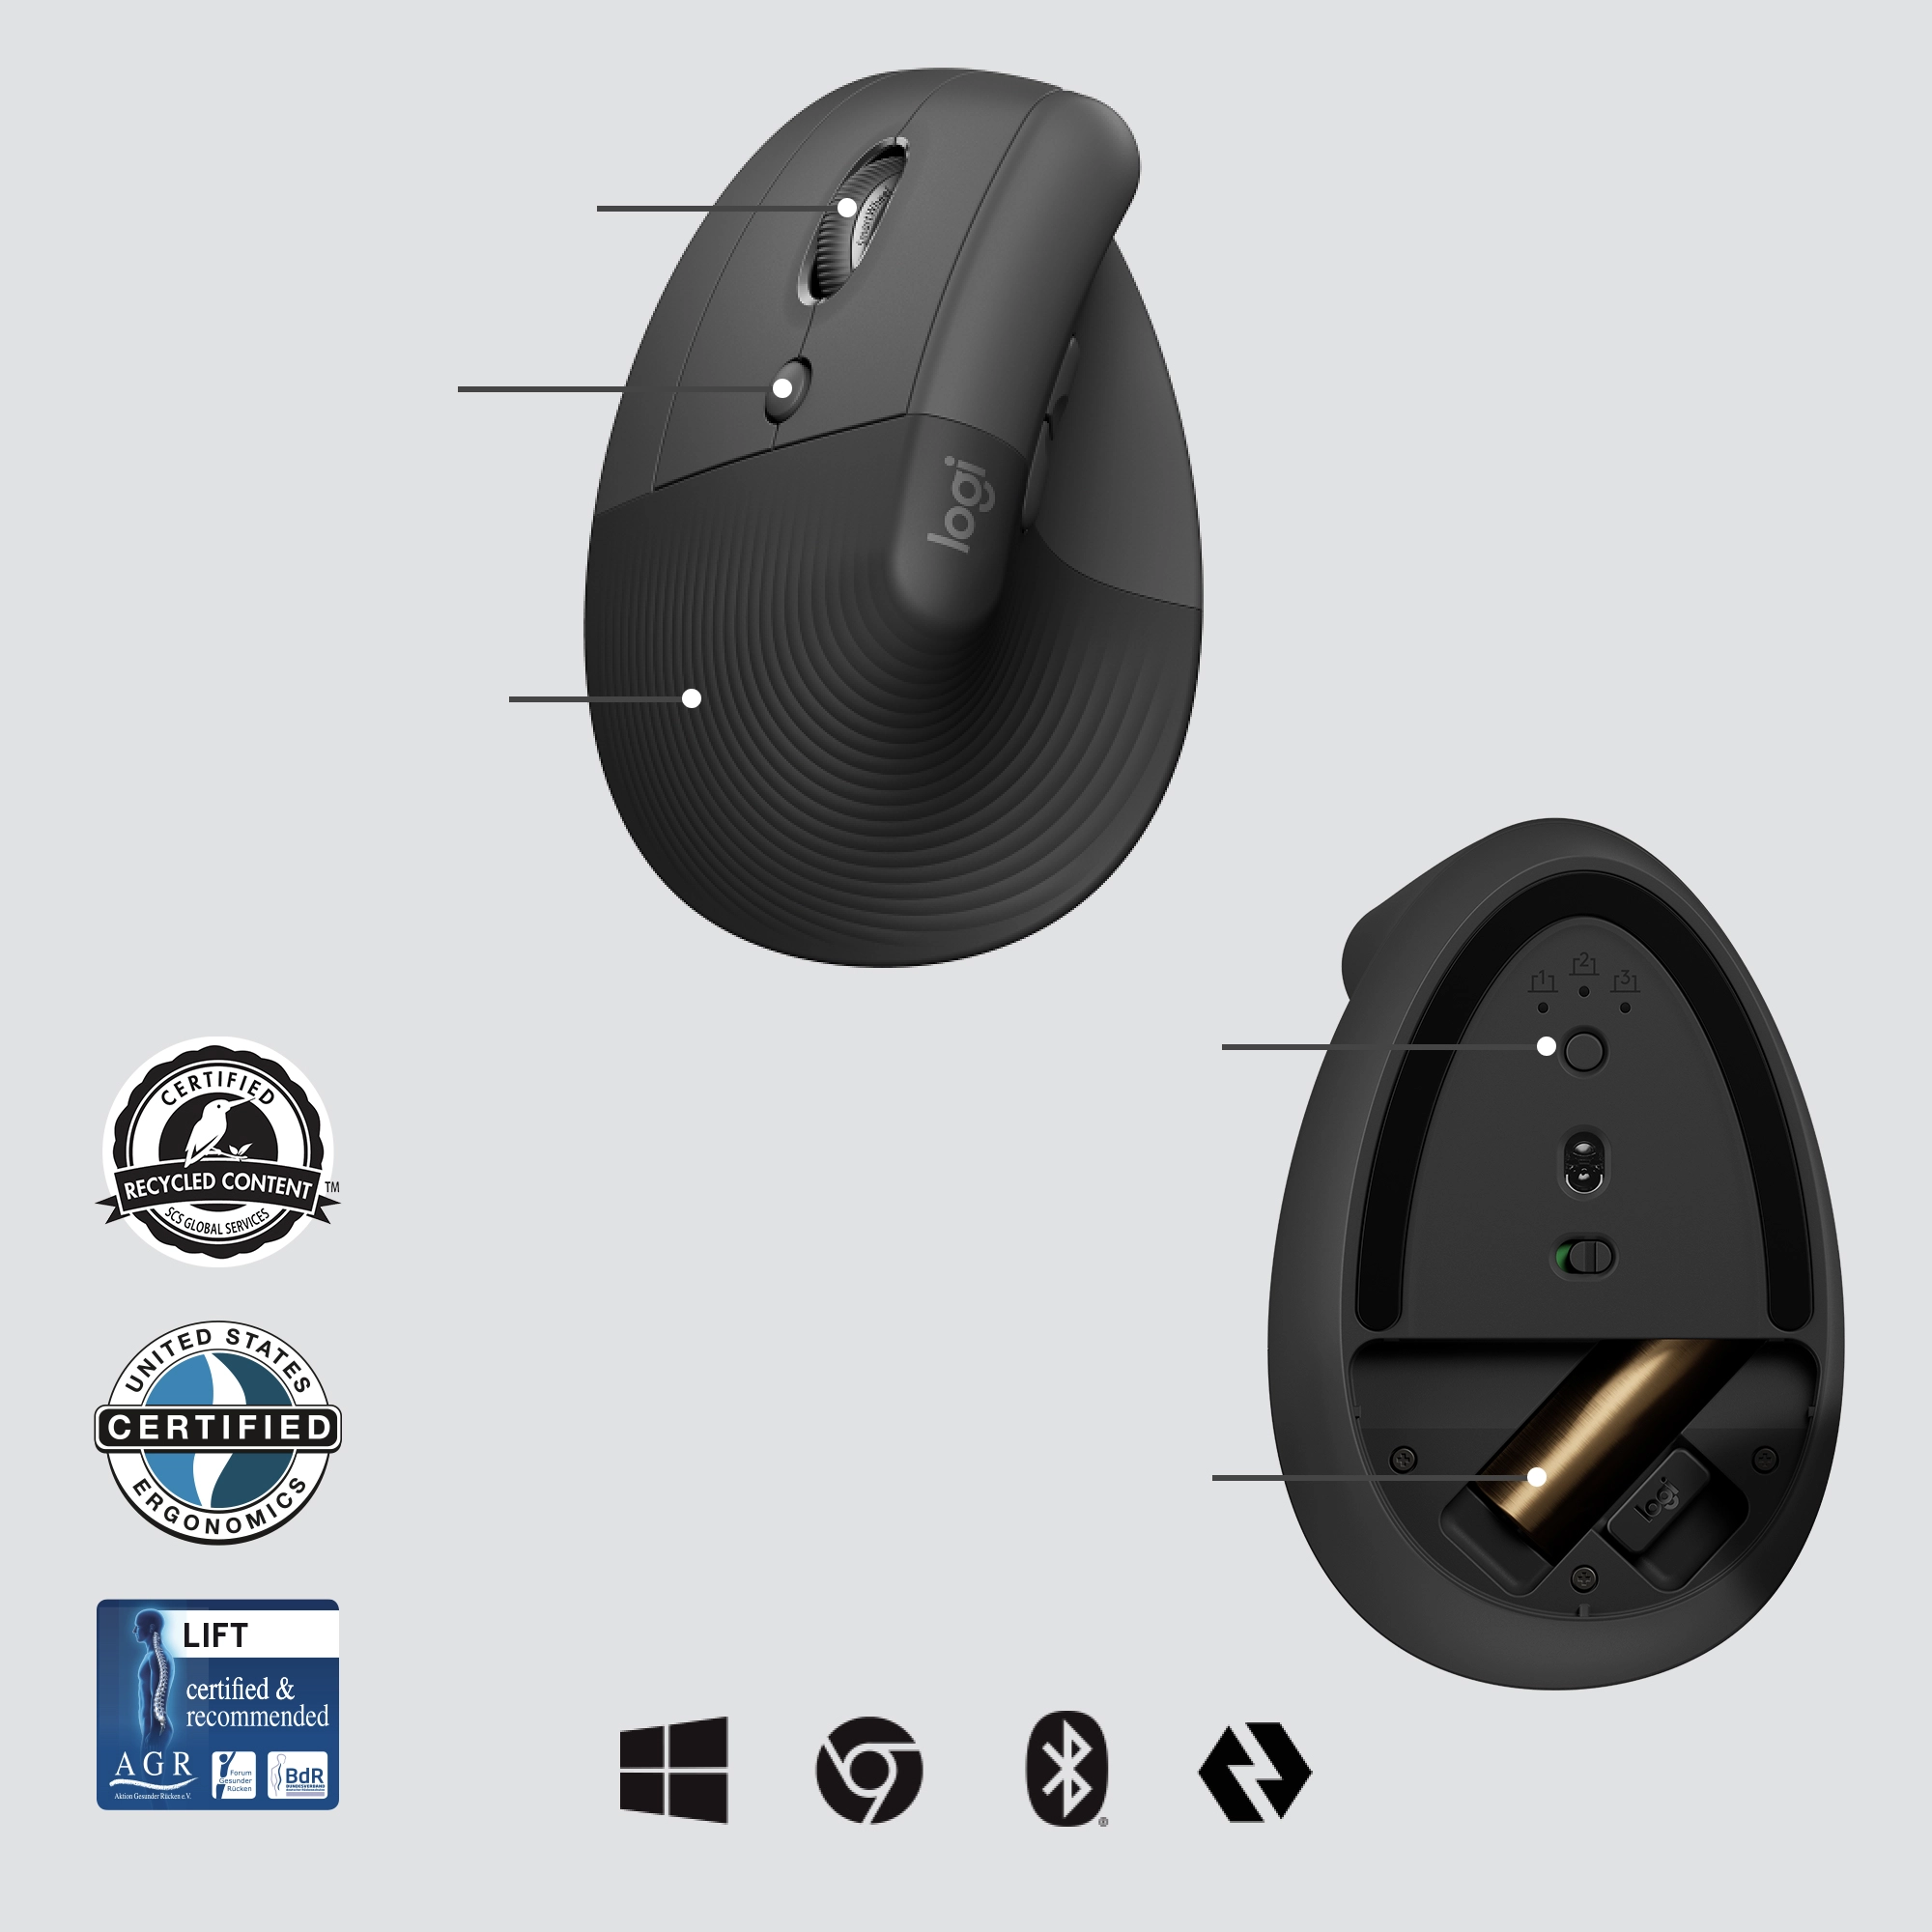 Logitech Lift for Business - Vertikale Maus - ergonomisch - für Linkshänder